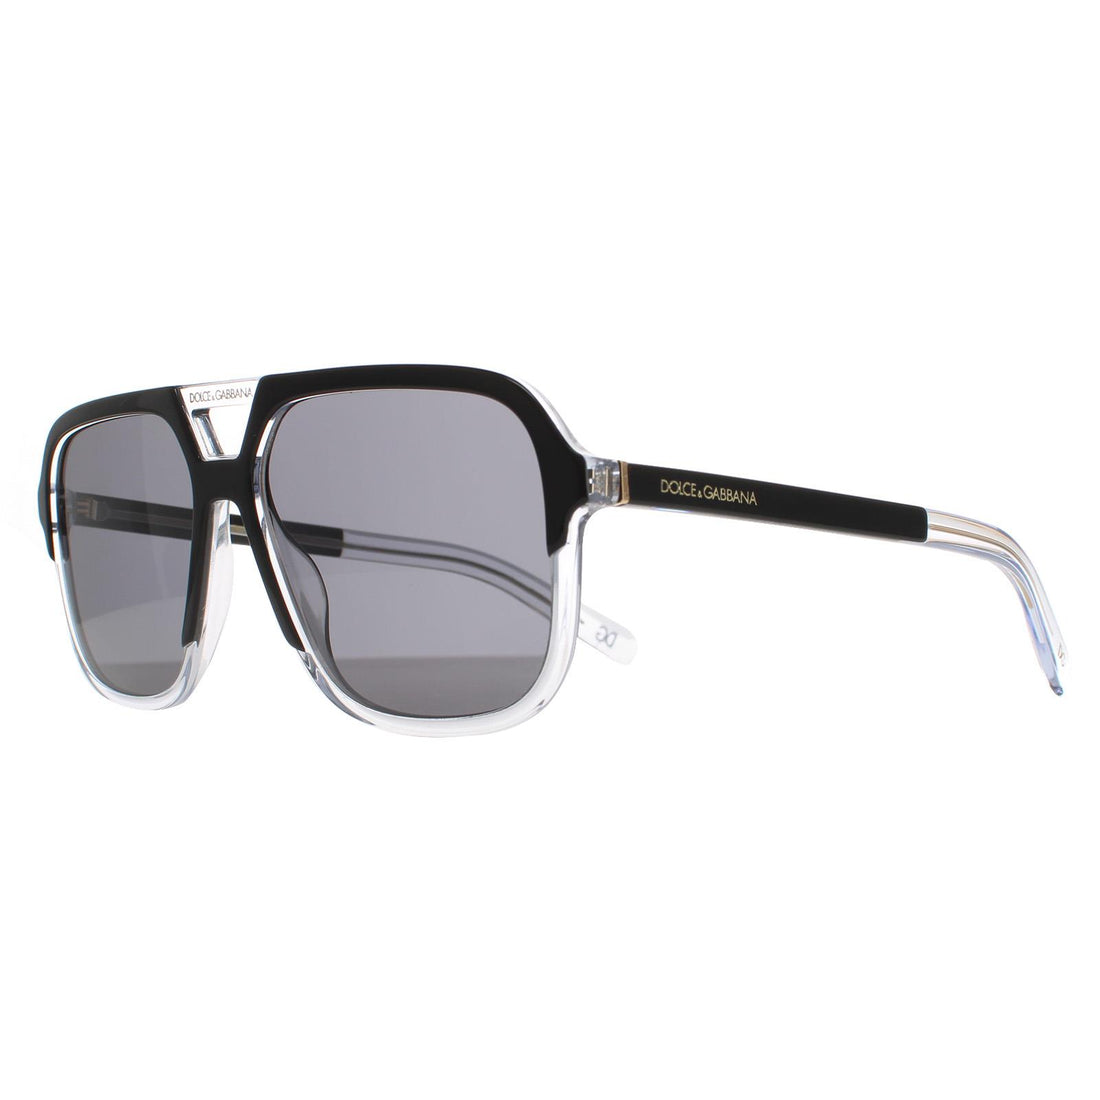 Dolce & Gabbana DG4354 Sunglasses